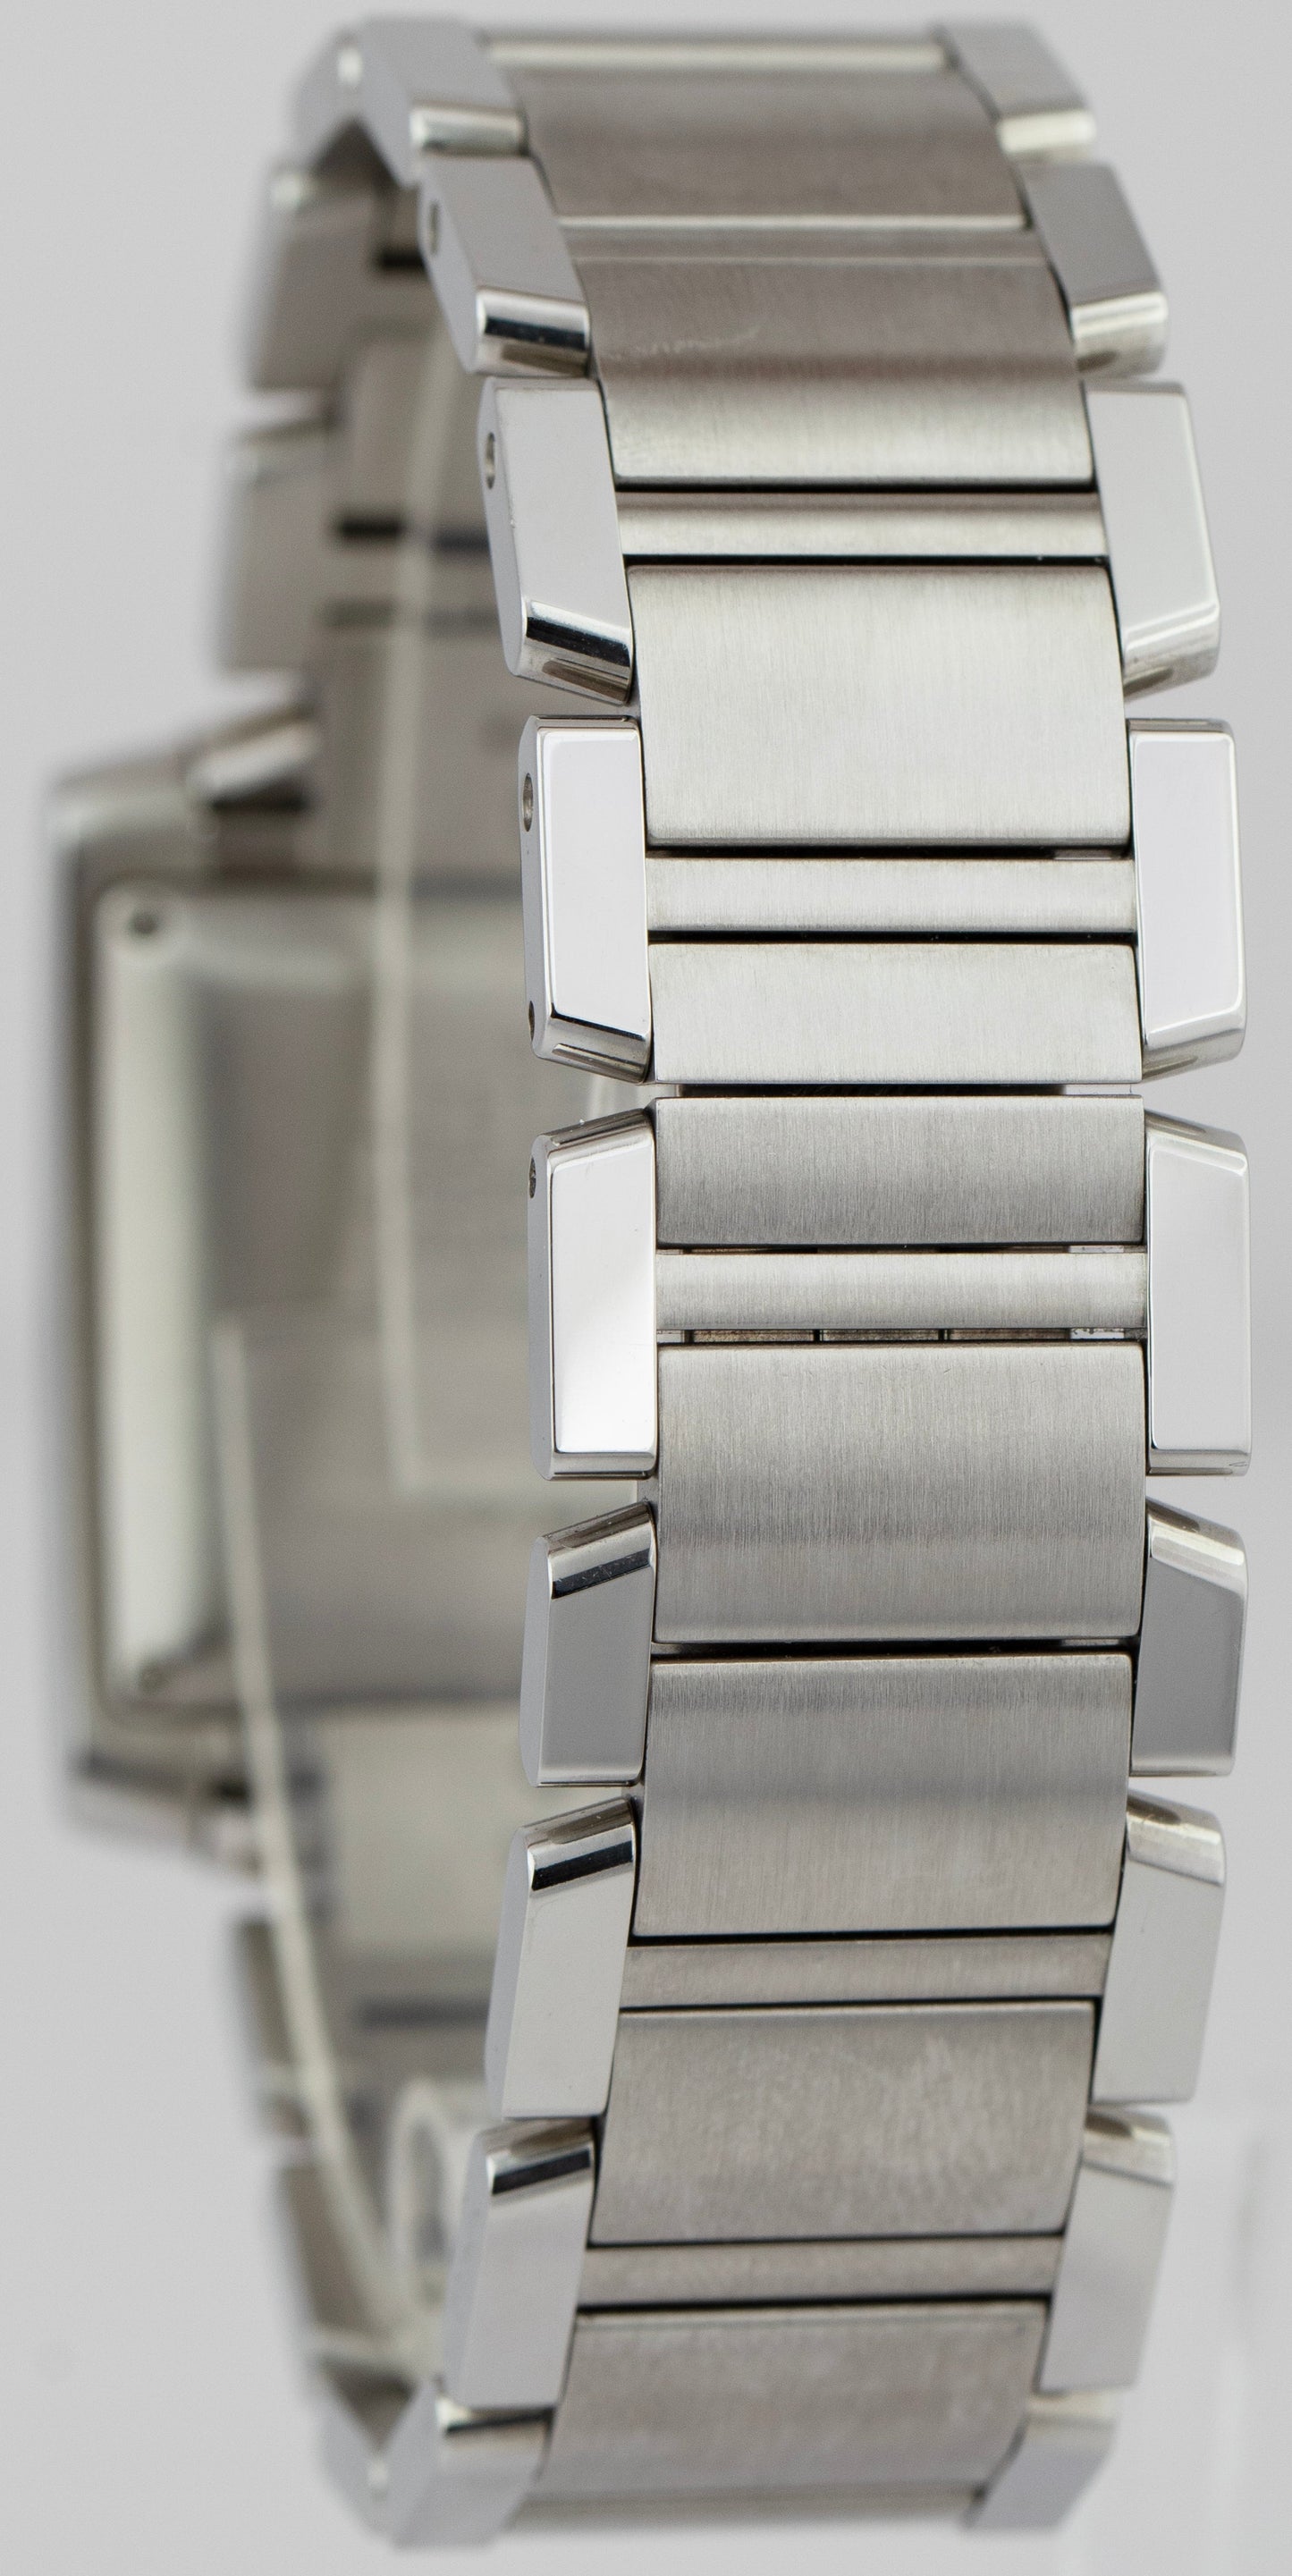 Cartier Tank Francaise Full-Size DIAMOND Steel Silver Watch W51002Q3 2302 BOX